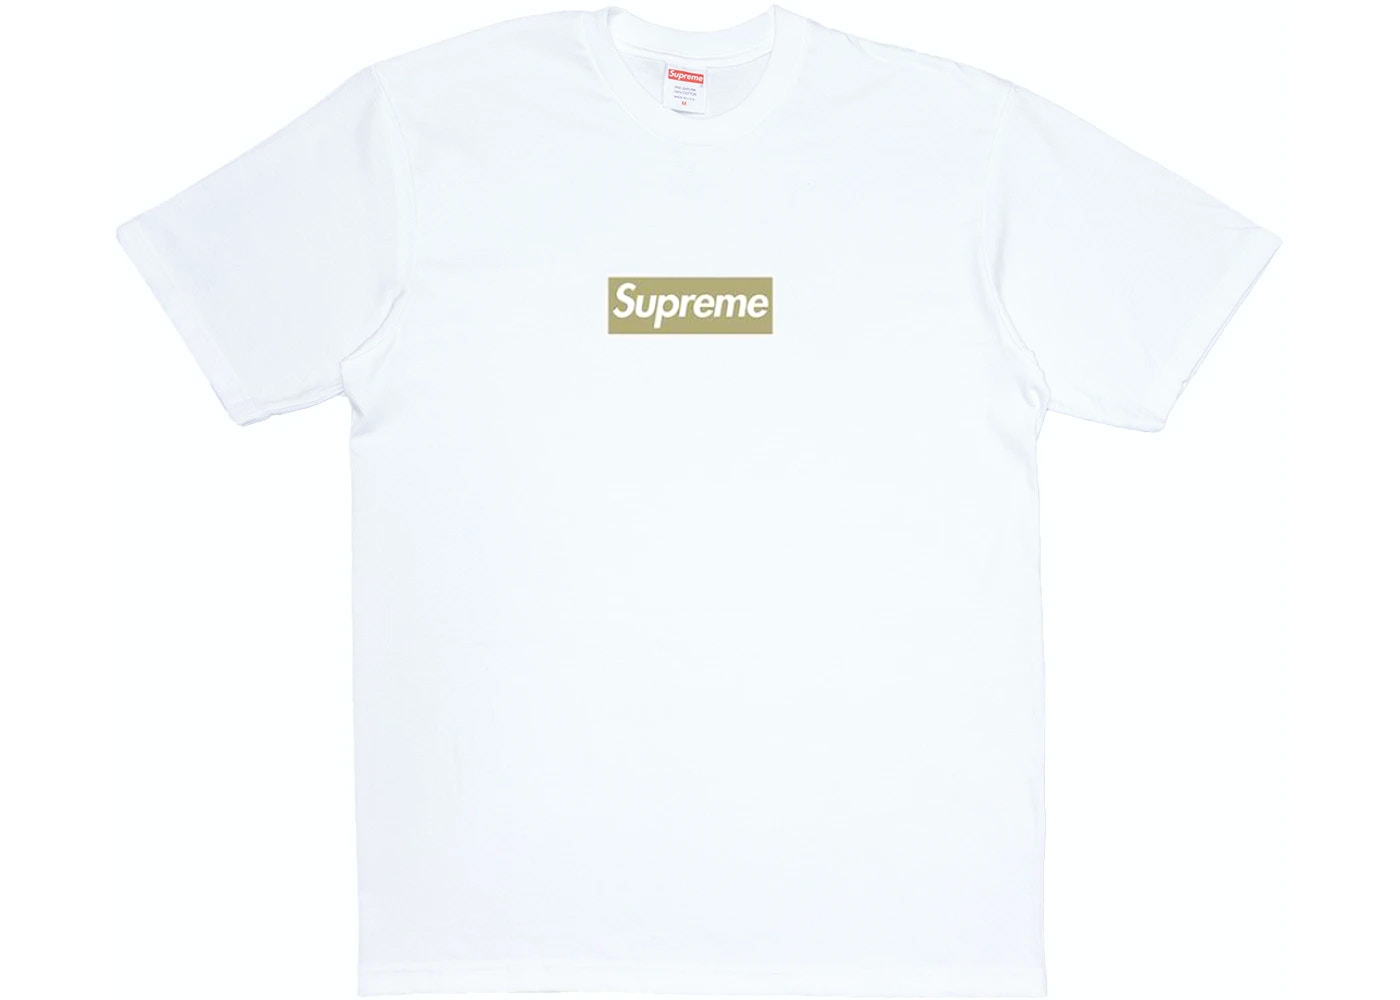 supreme t shirt original price